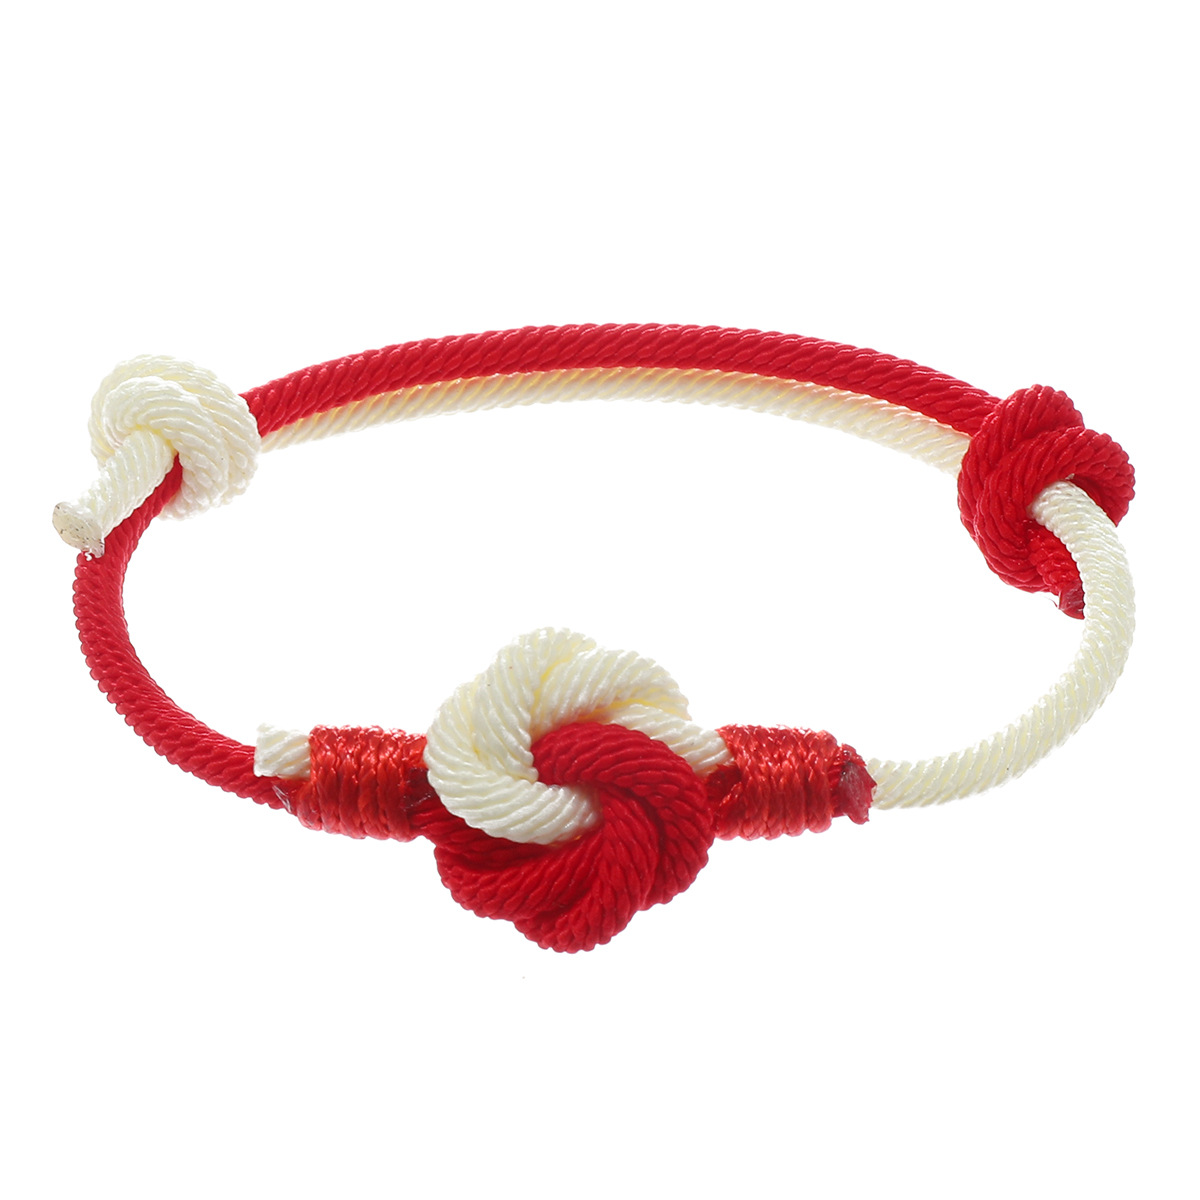 Red + beige (Mandala knot)